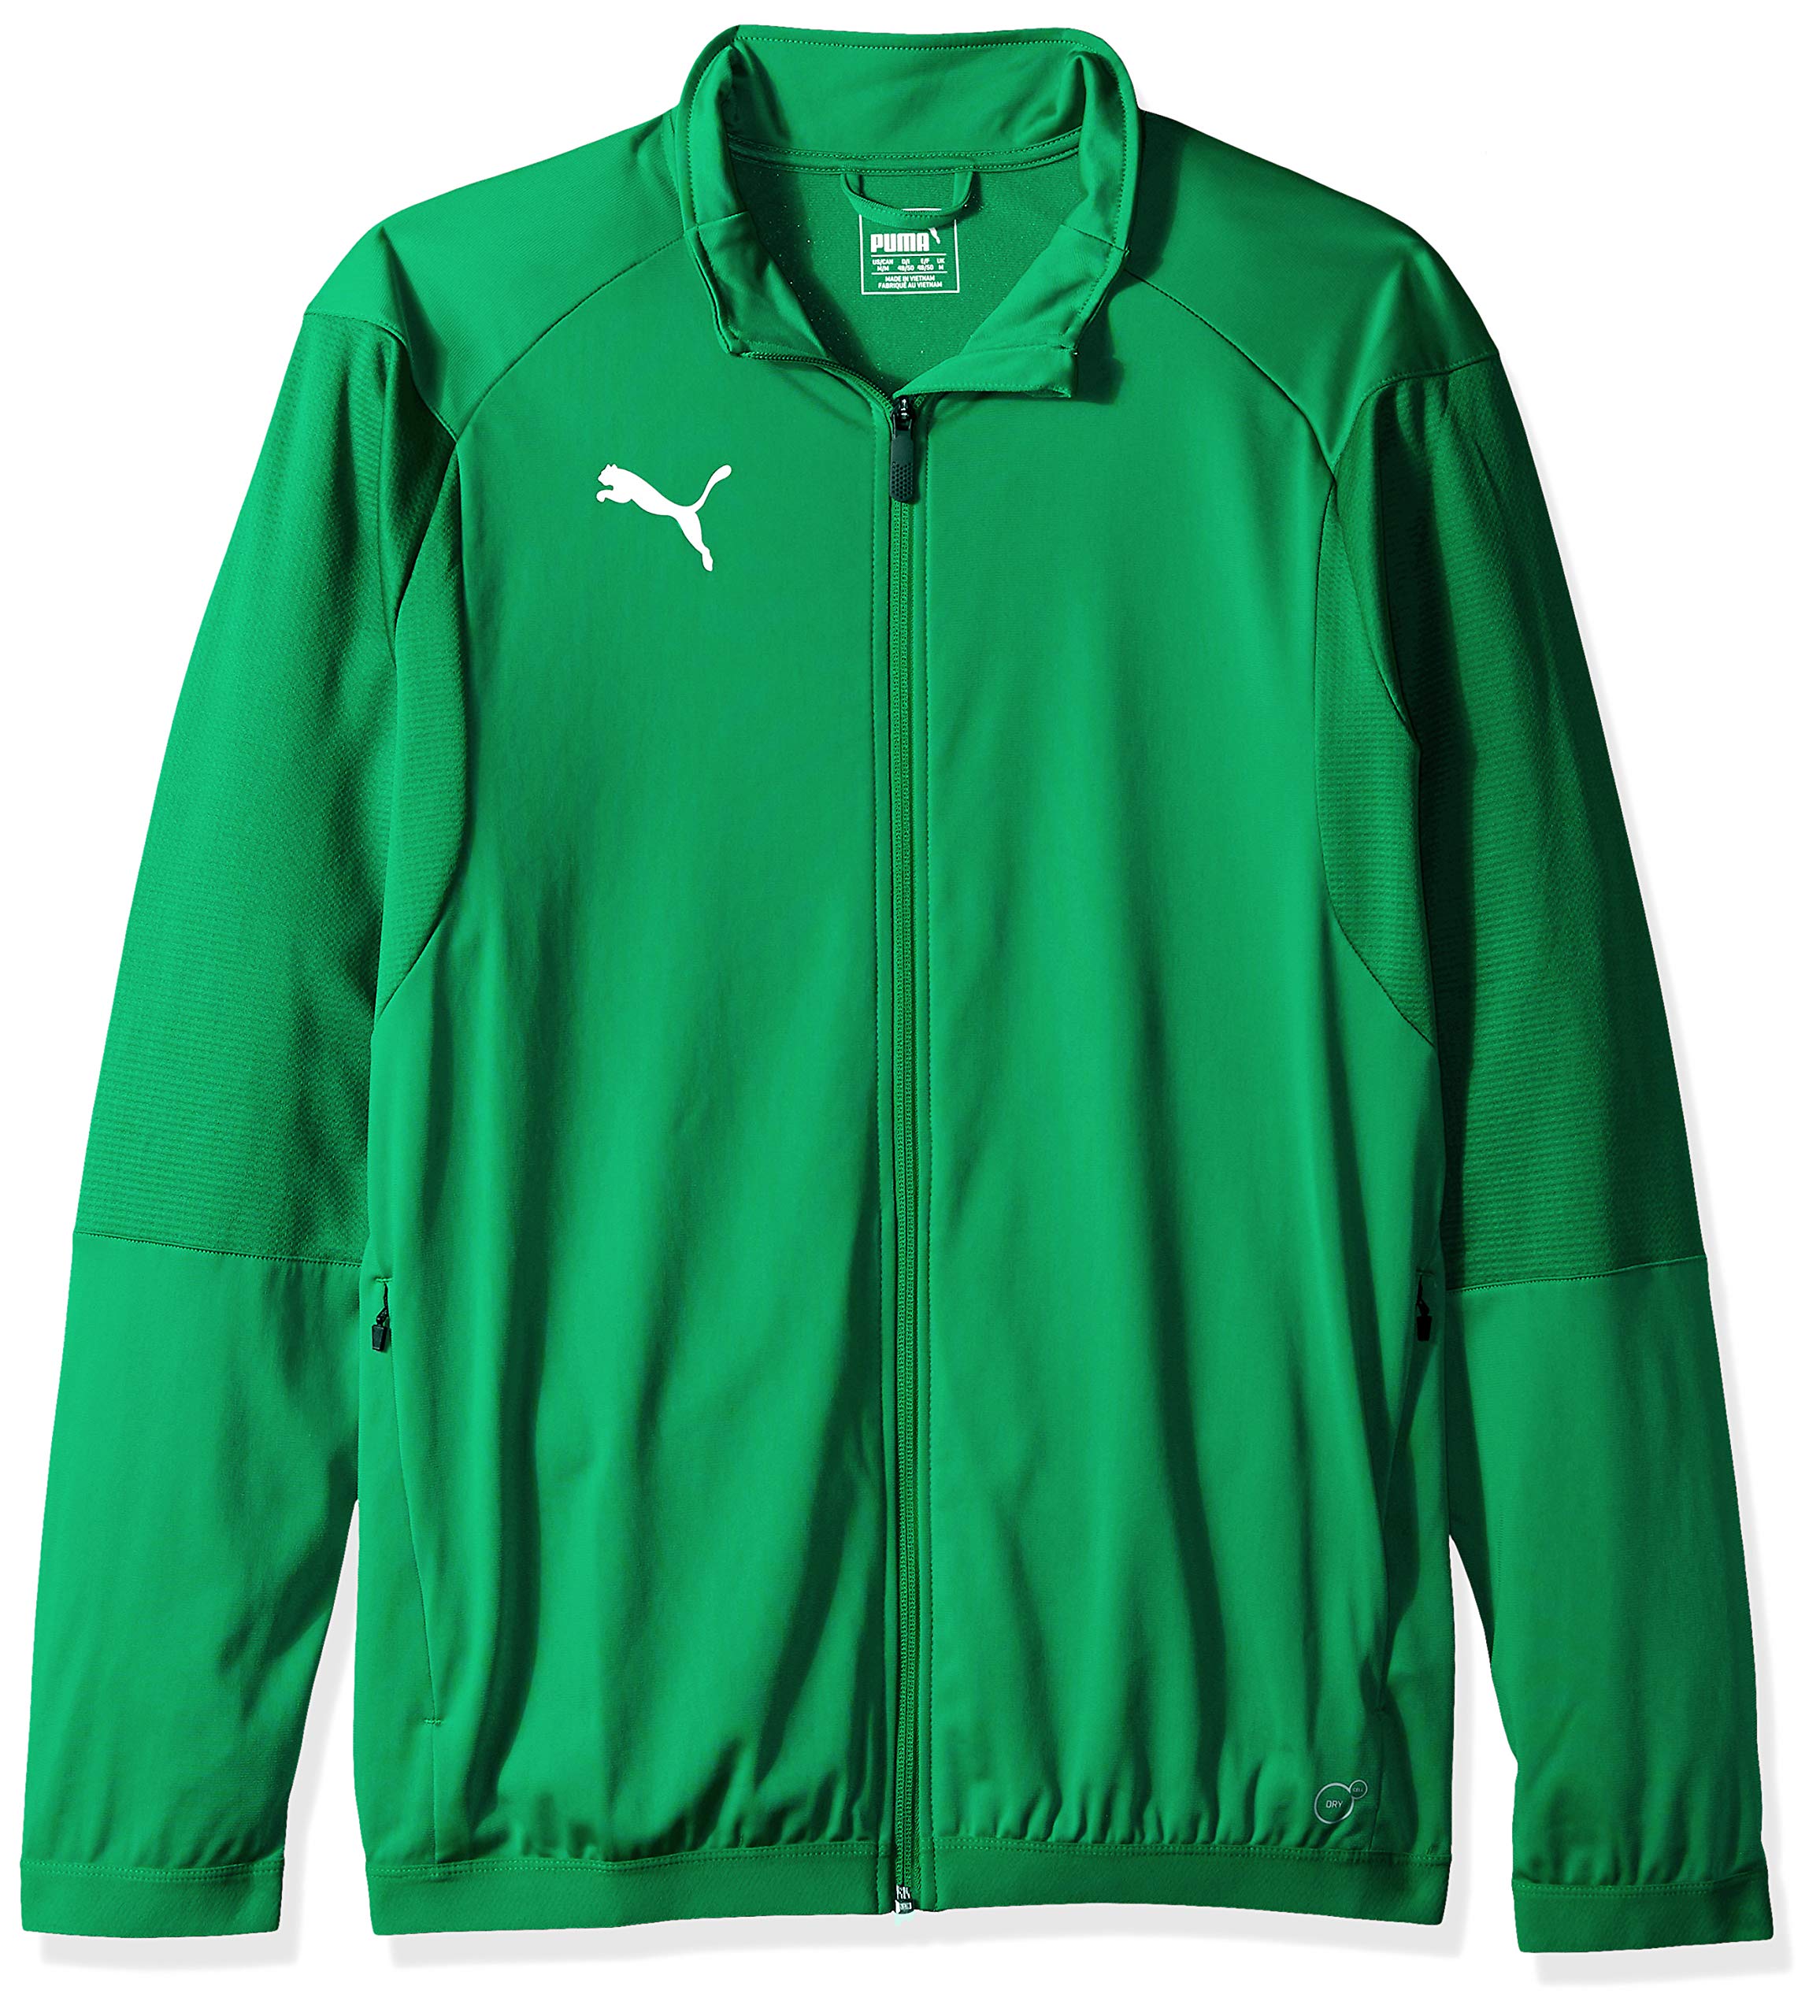 PUMA Mens Liga Training Jacket - Pepper Green/White - Large